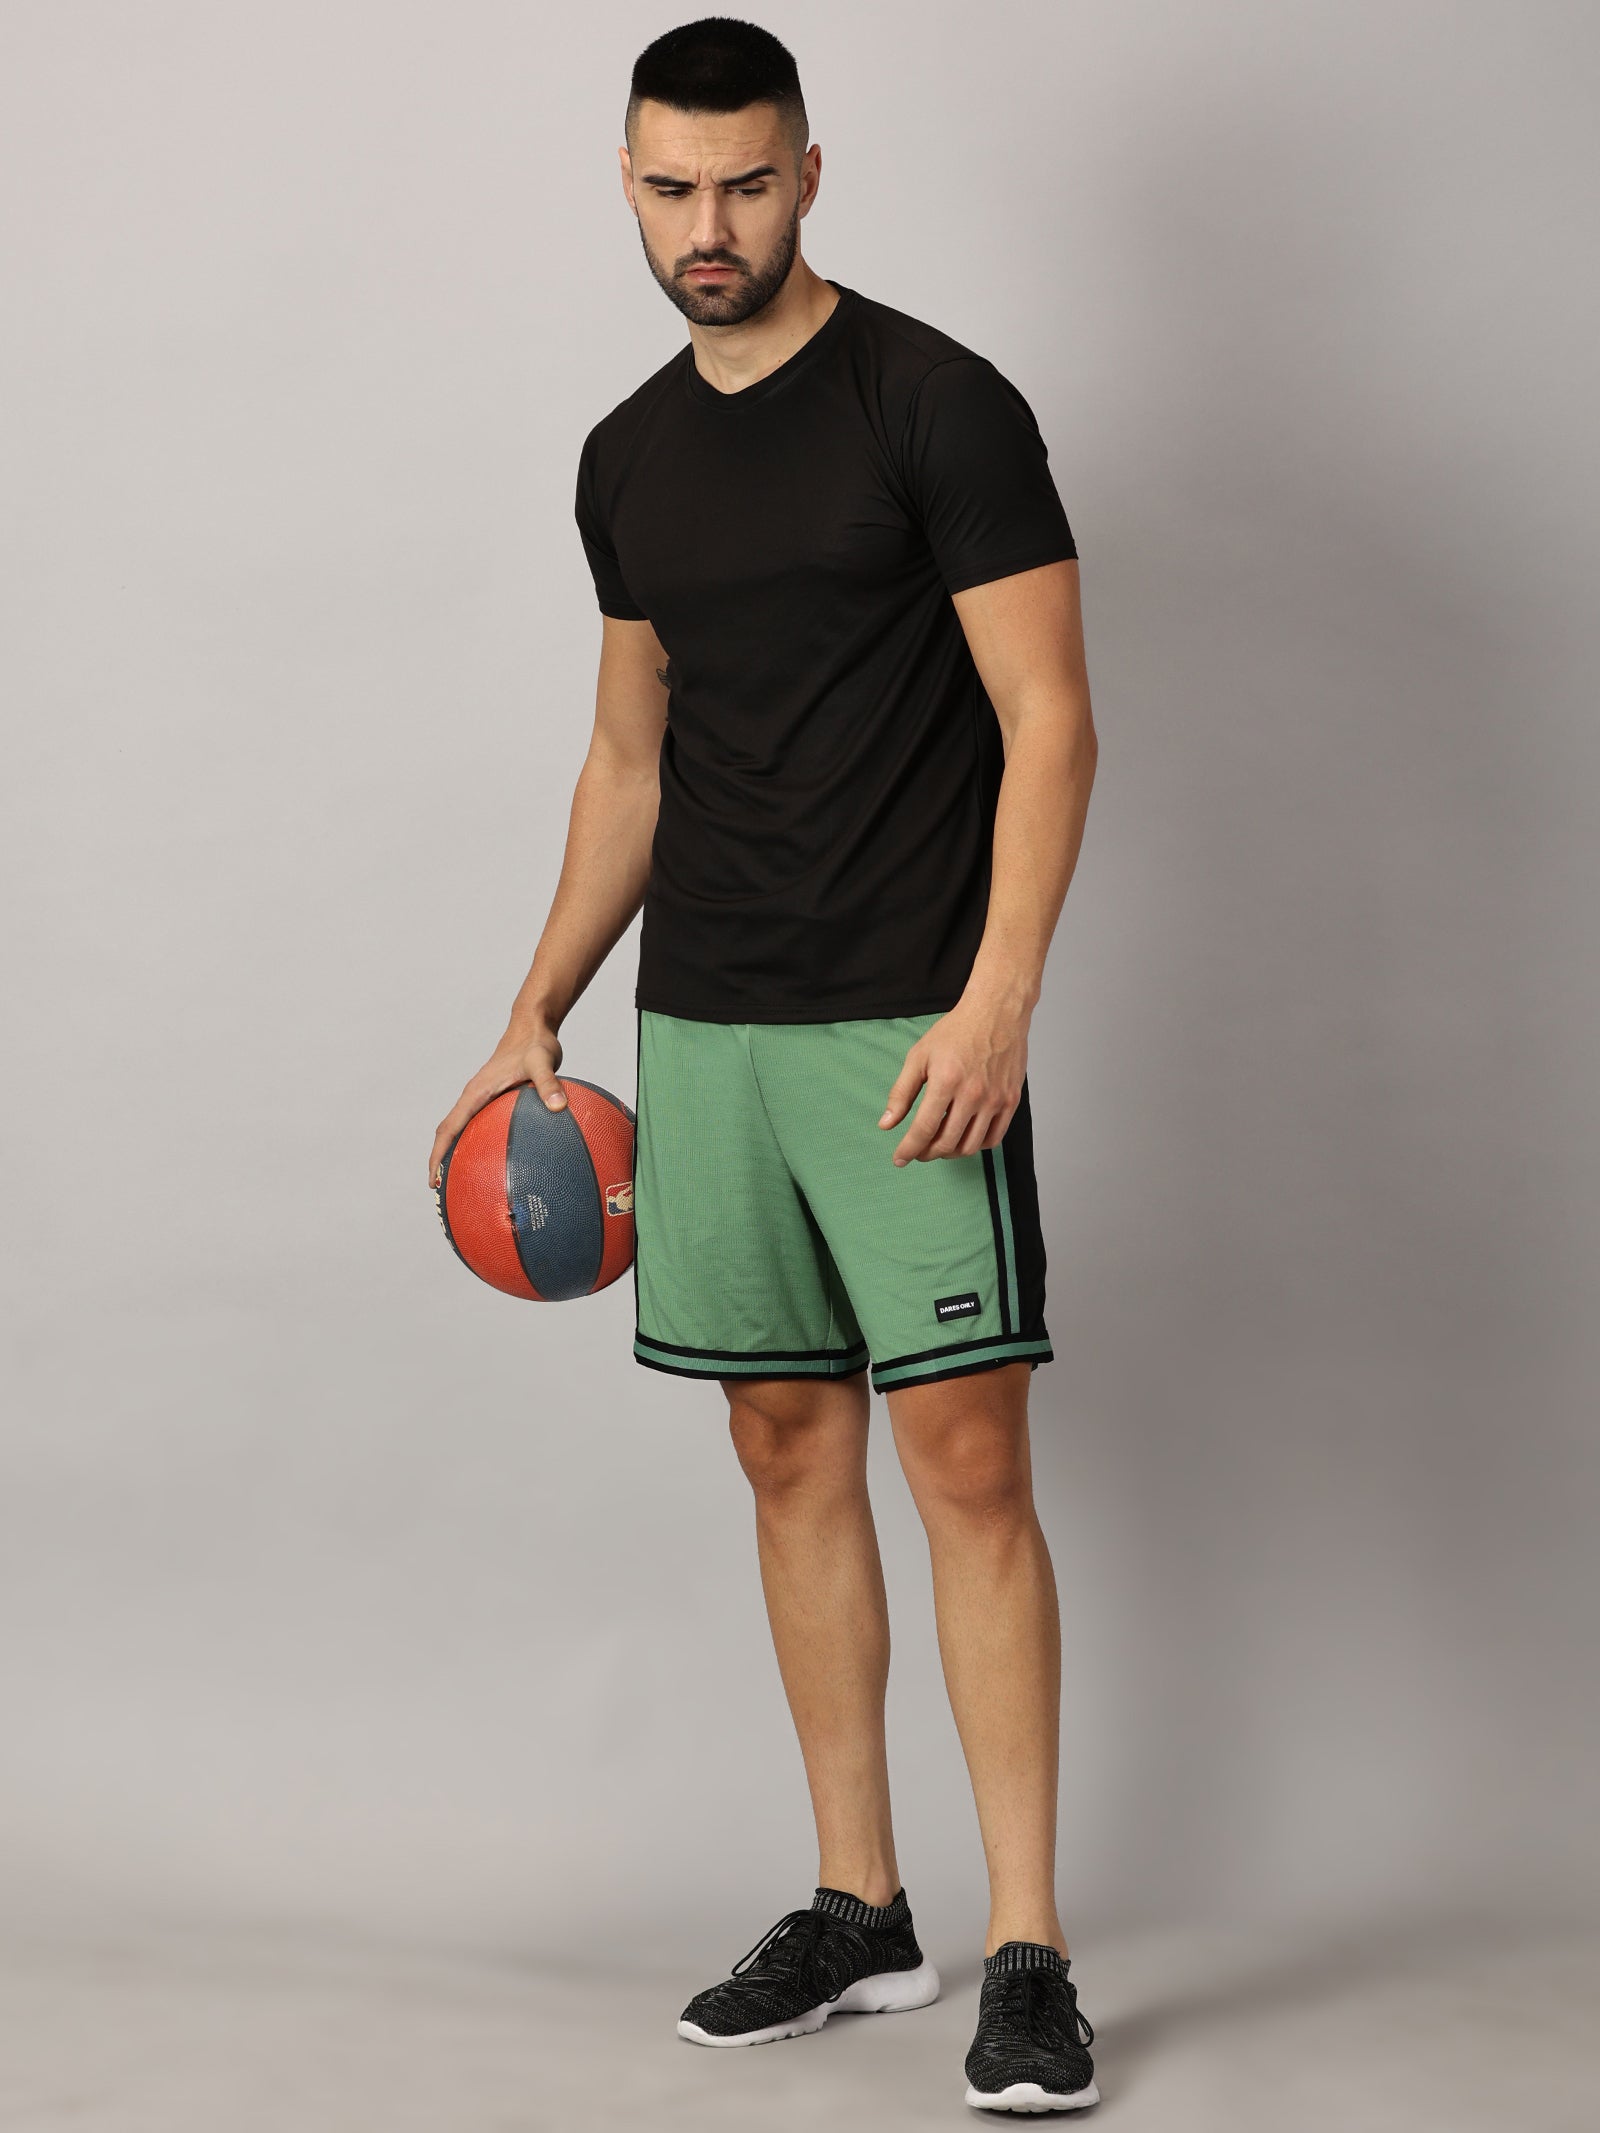 Defy Gravity Basketball shorts Avocado Green